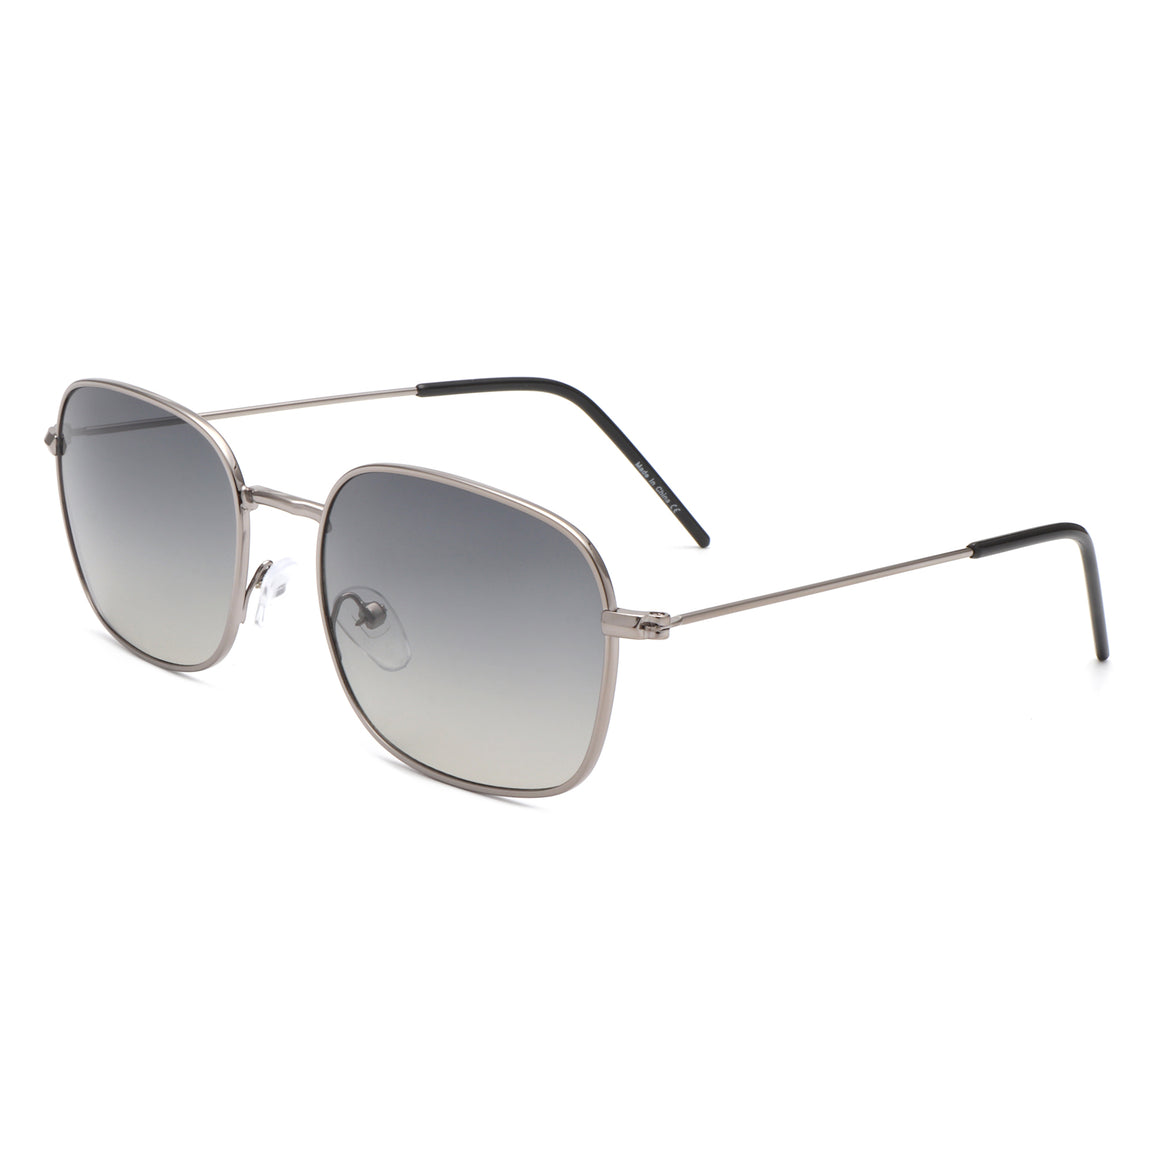 Gleam - Square Flat Top Tinted Retro Fashion Sunglasses